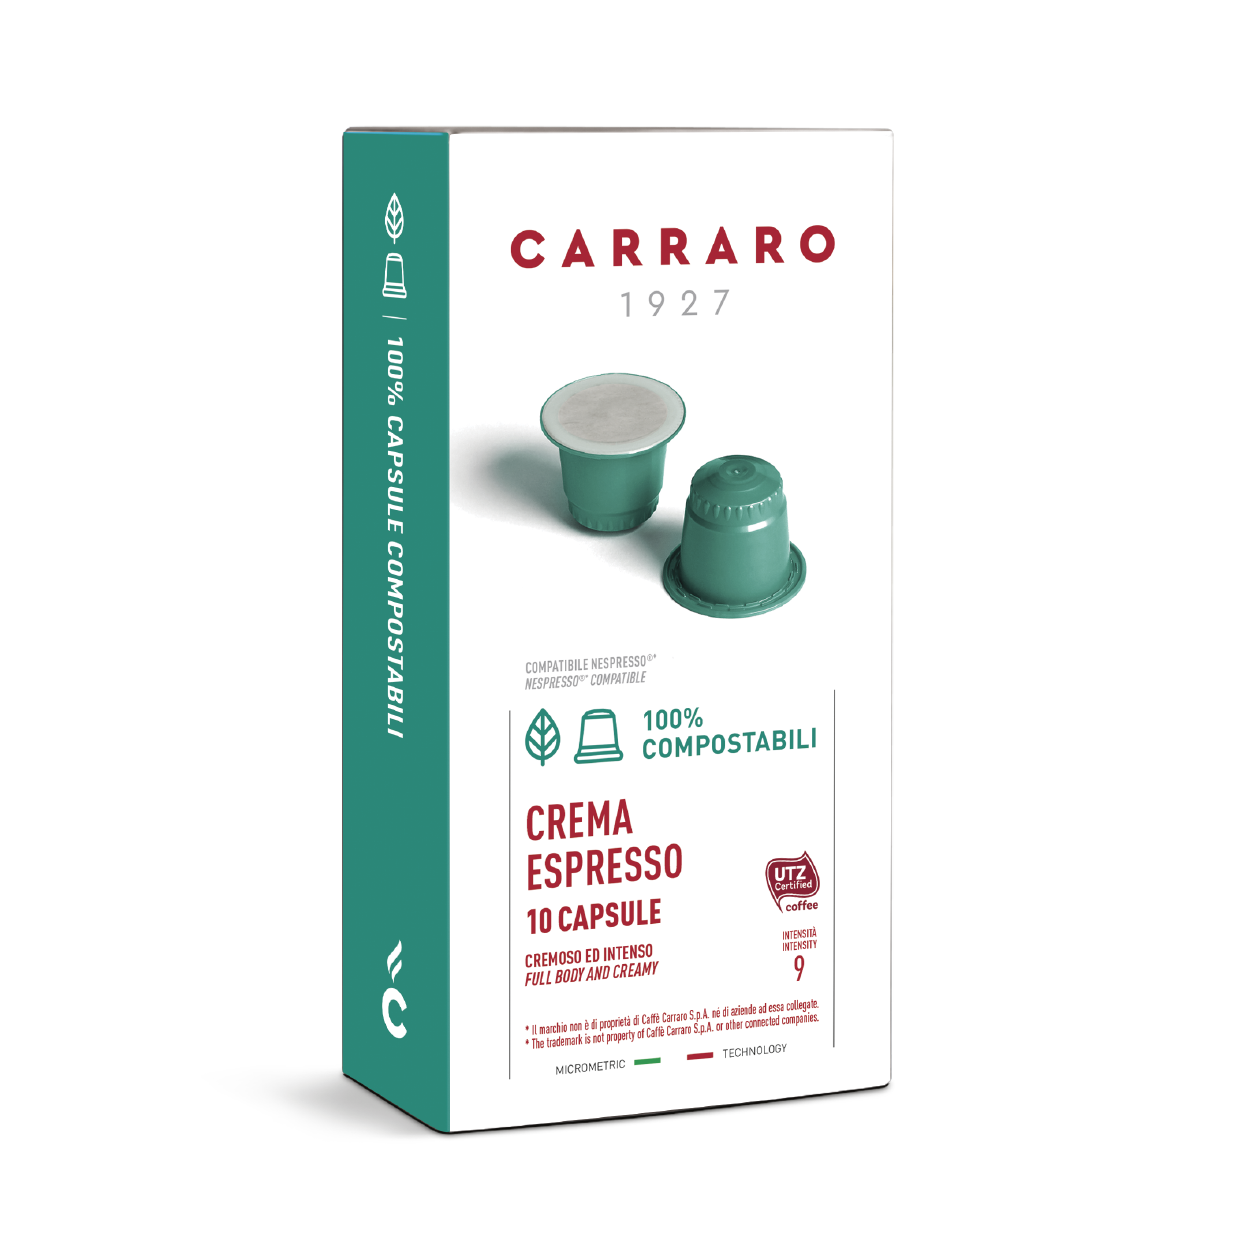 Carraro caps nespresso 10 miscele compostabili PRIMO MATTINO 03